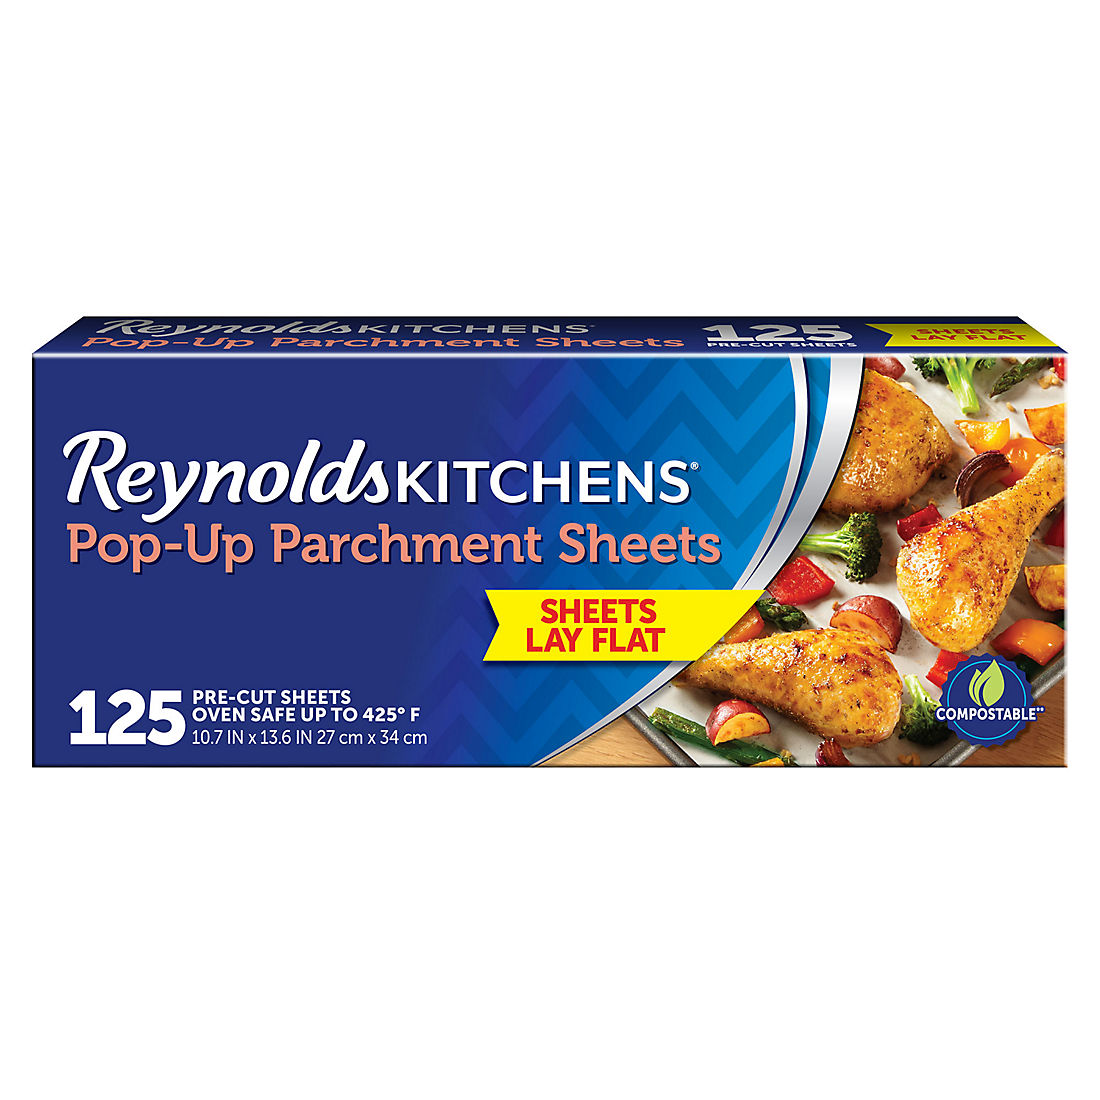 Reynolds Kitchens Parchment Sheets, Pop-Up, Pre-Cut - 125 sheets